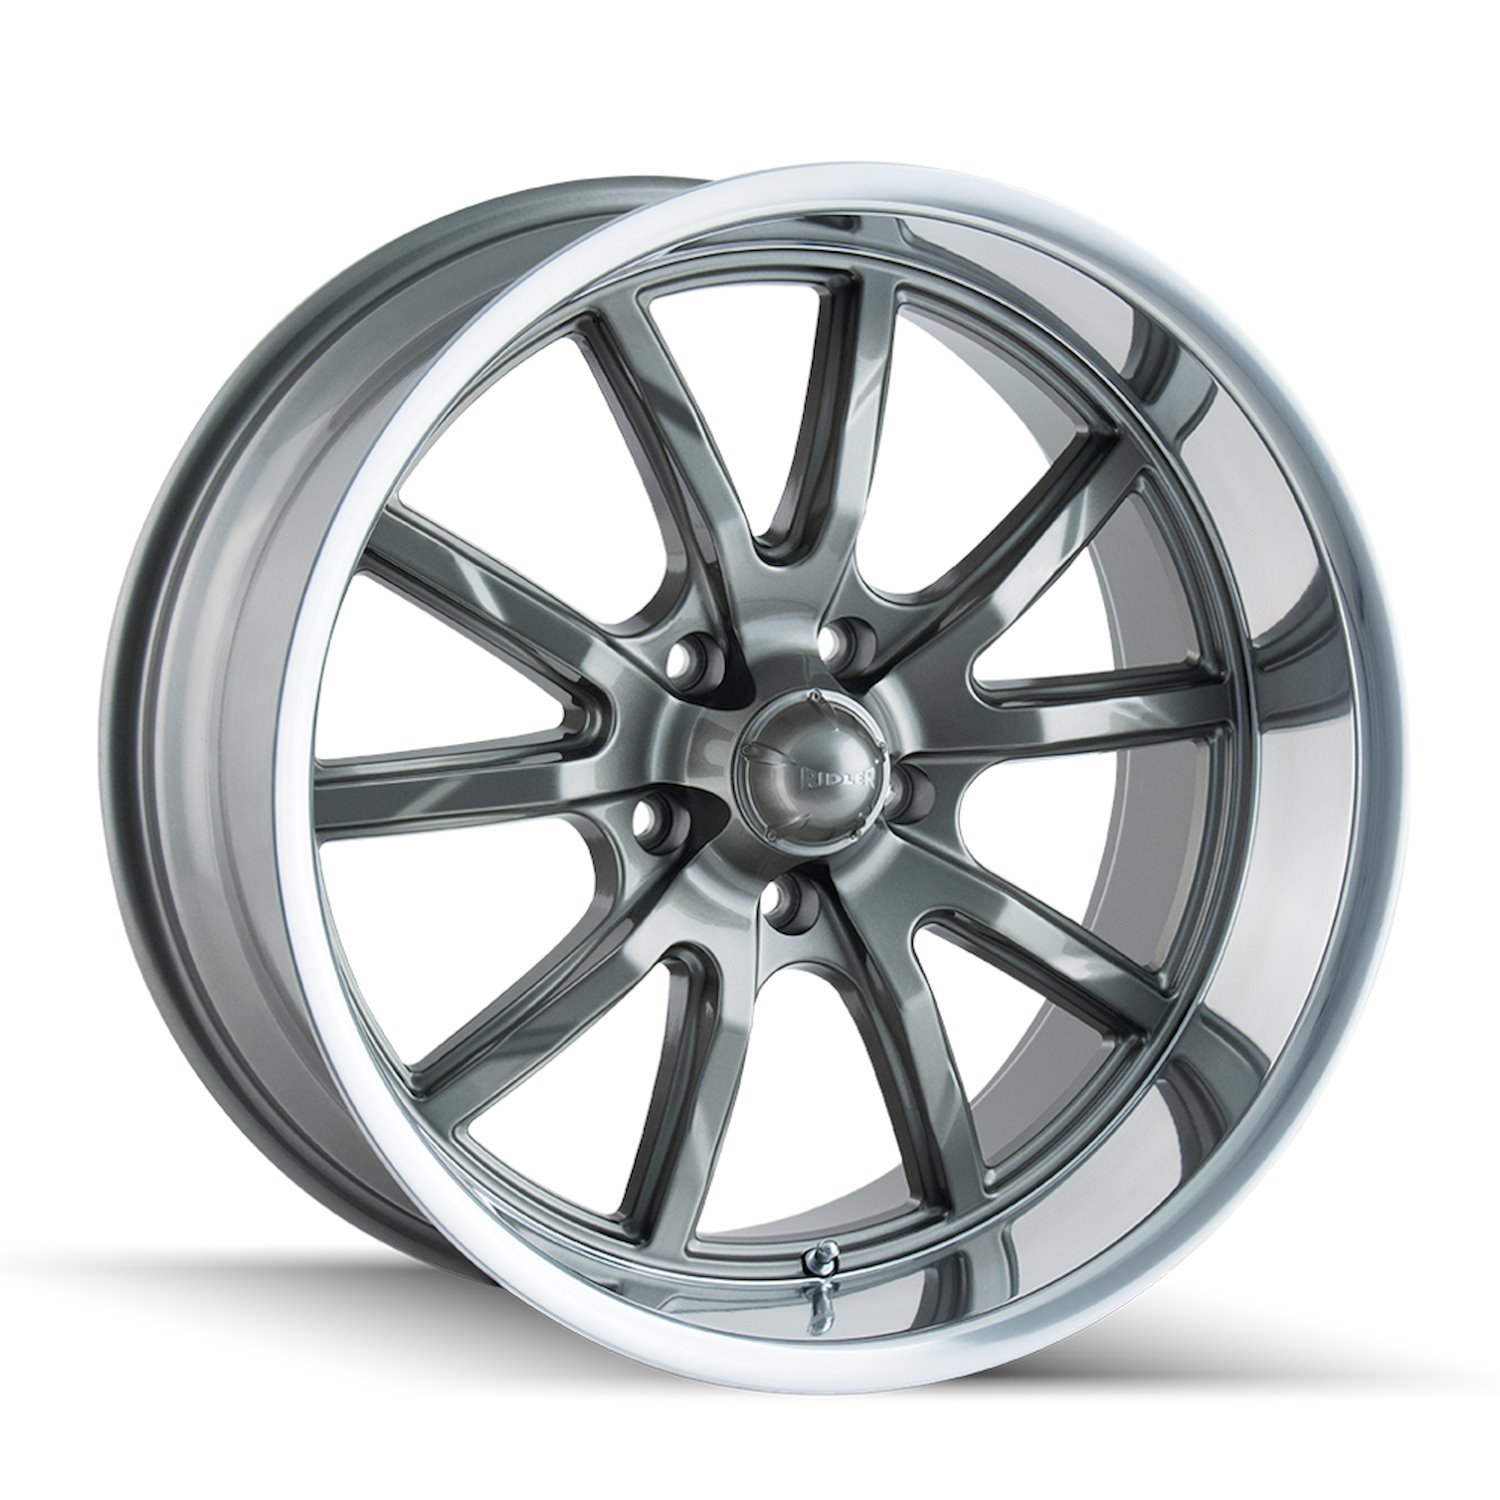 650-22912G18 650-Series Wheel [Size: 22" x 9.50"] Gloss Grey Polished Finish